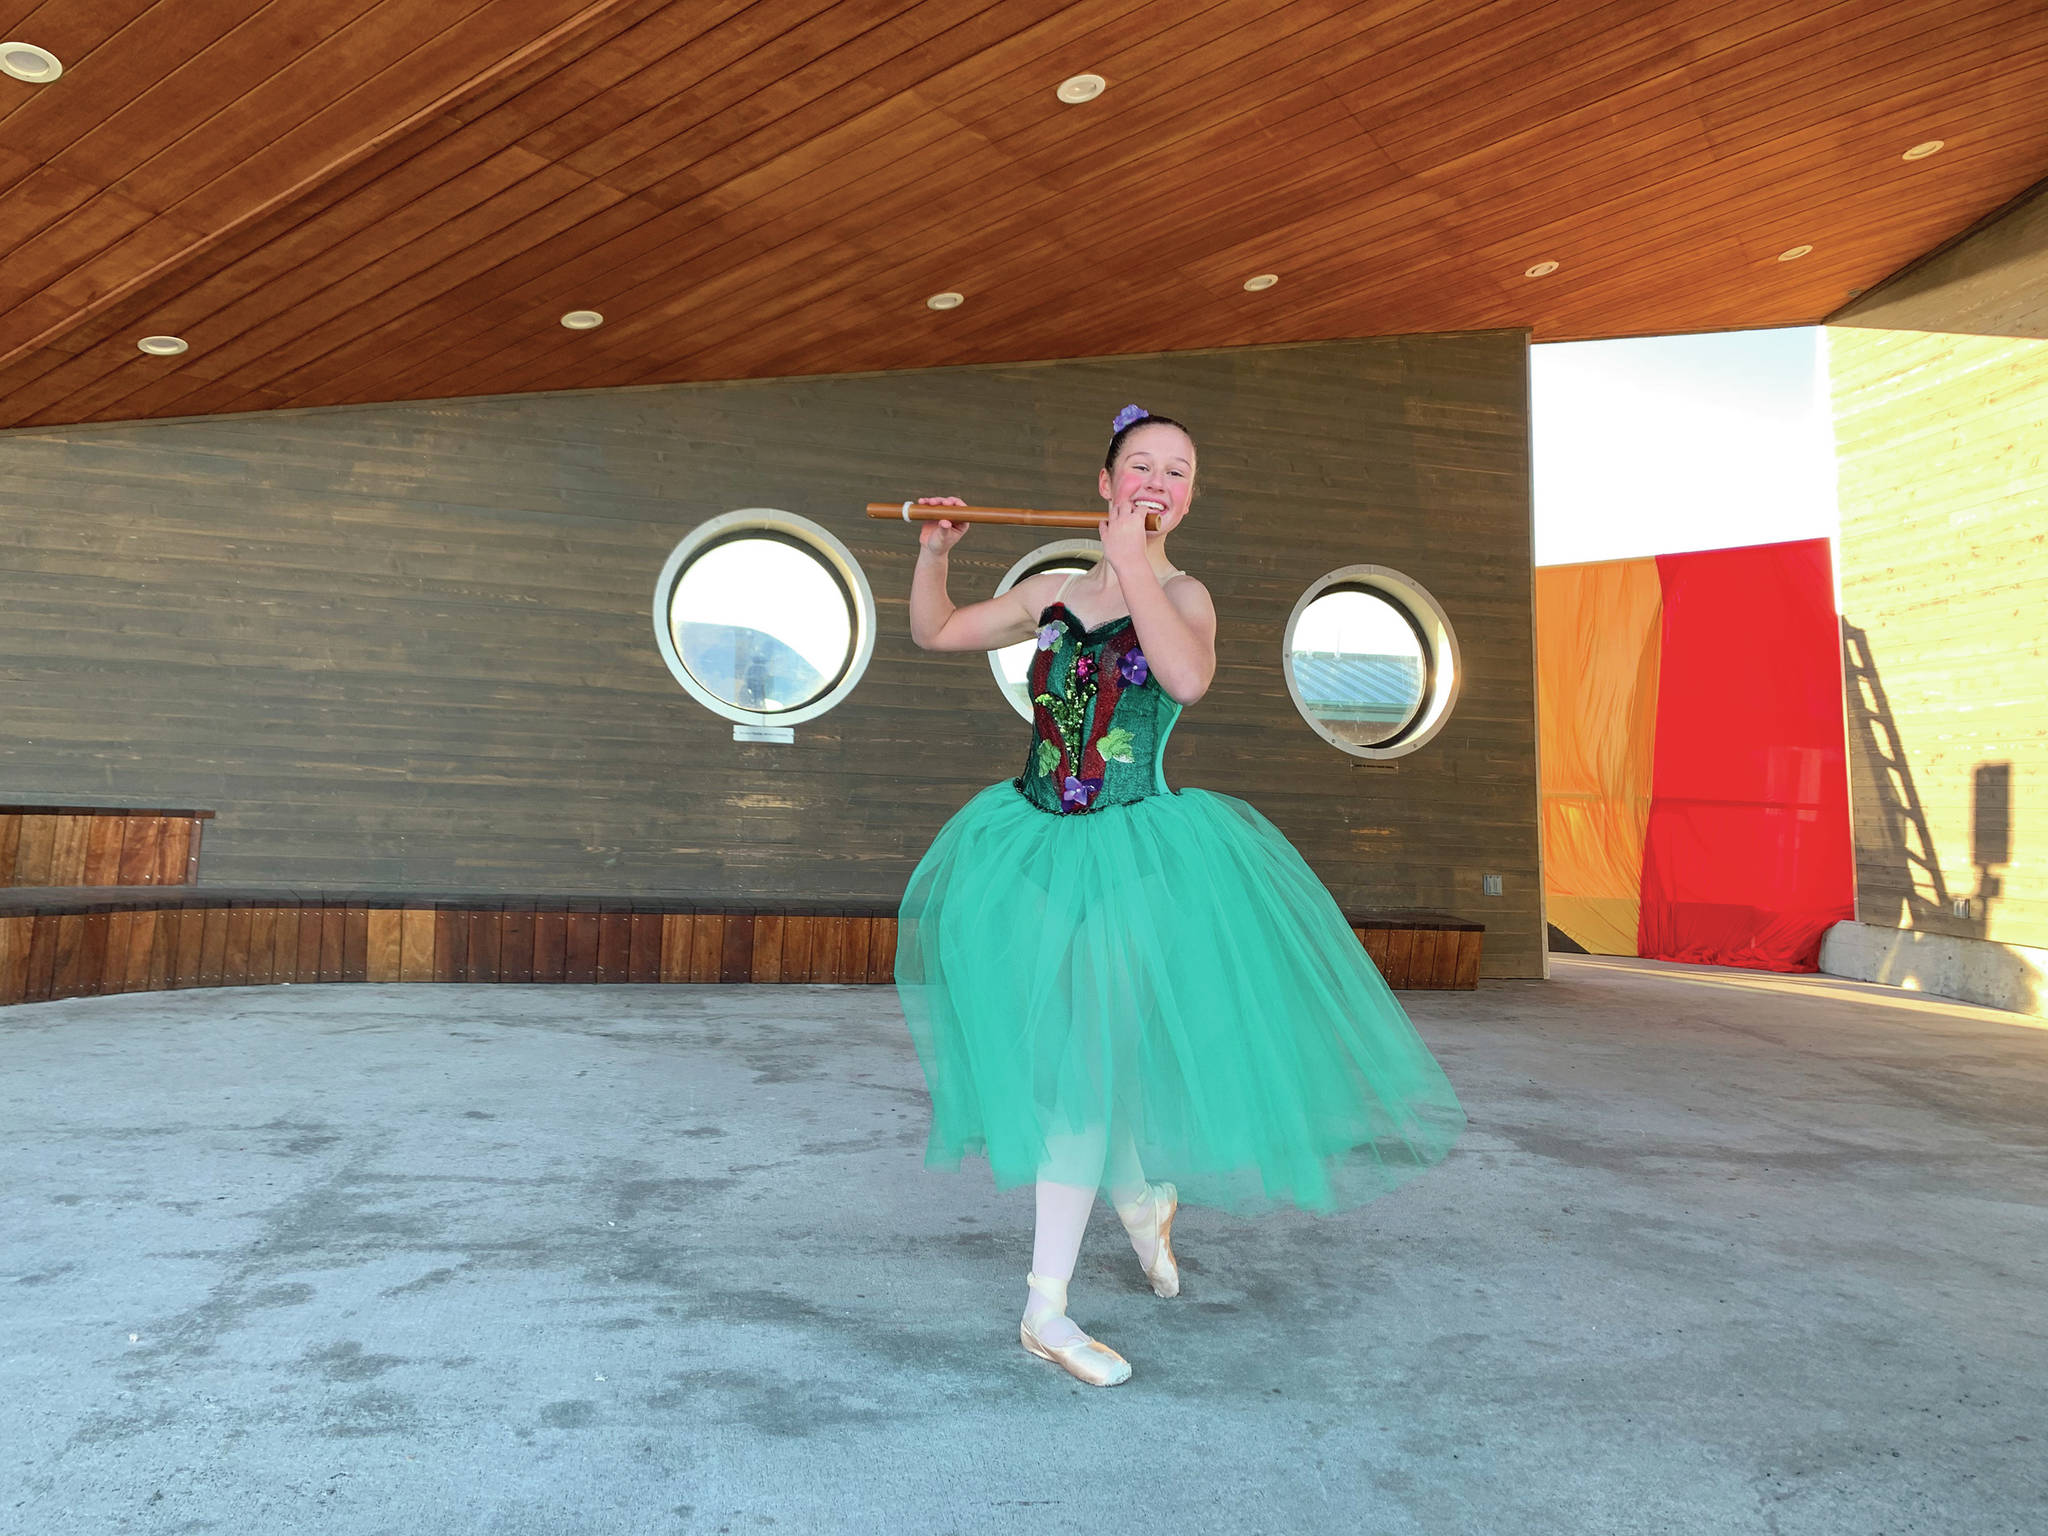 Ireland Styvar dances on Nov. 18, 2020, at the Homer Boathouse Pavillion in a scene for the “Petite Nutcracker Ballet” in Homer, Alaska. (Photo by Jennifer Norton)